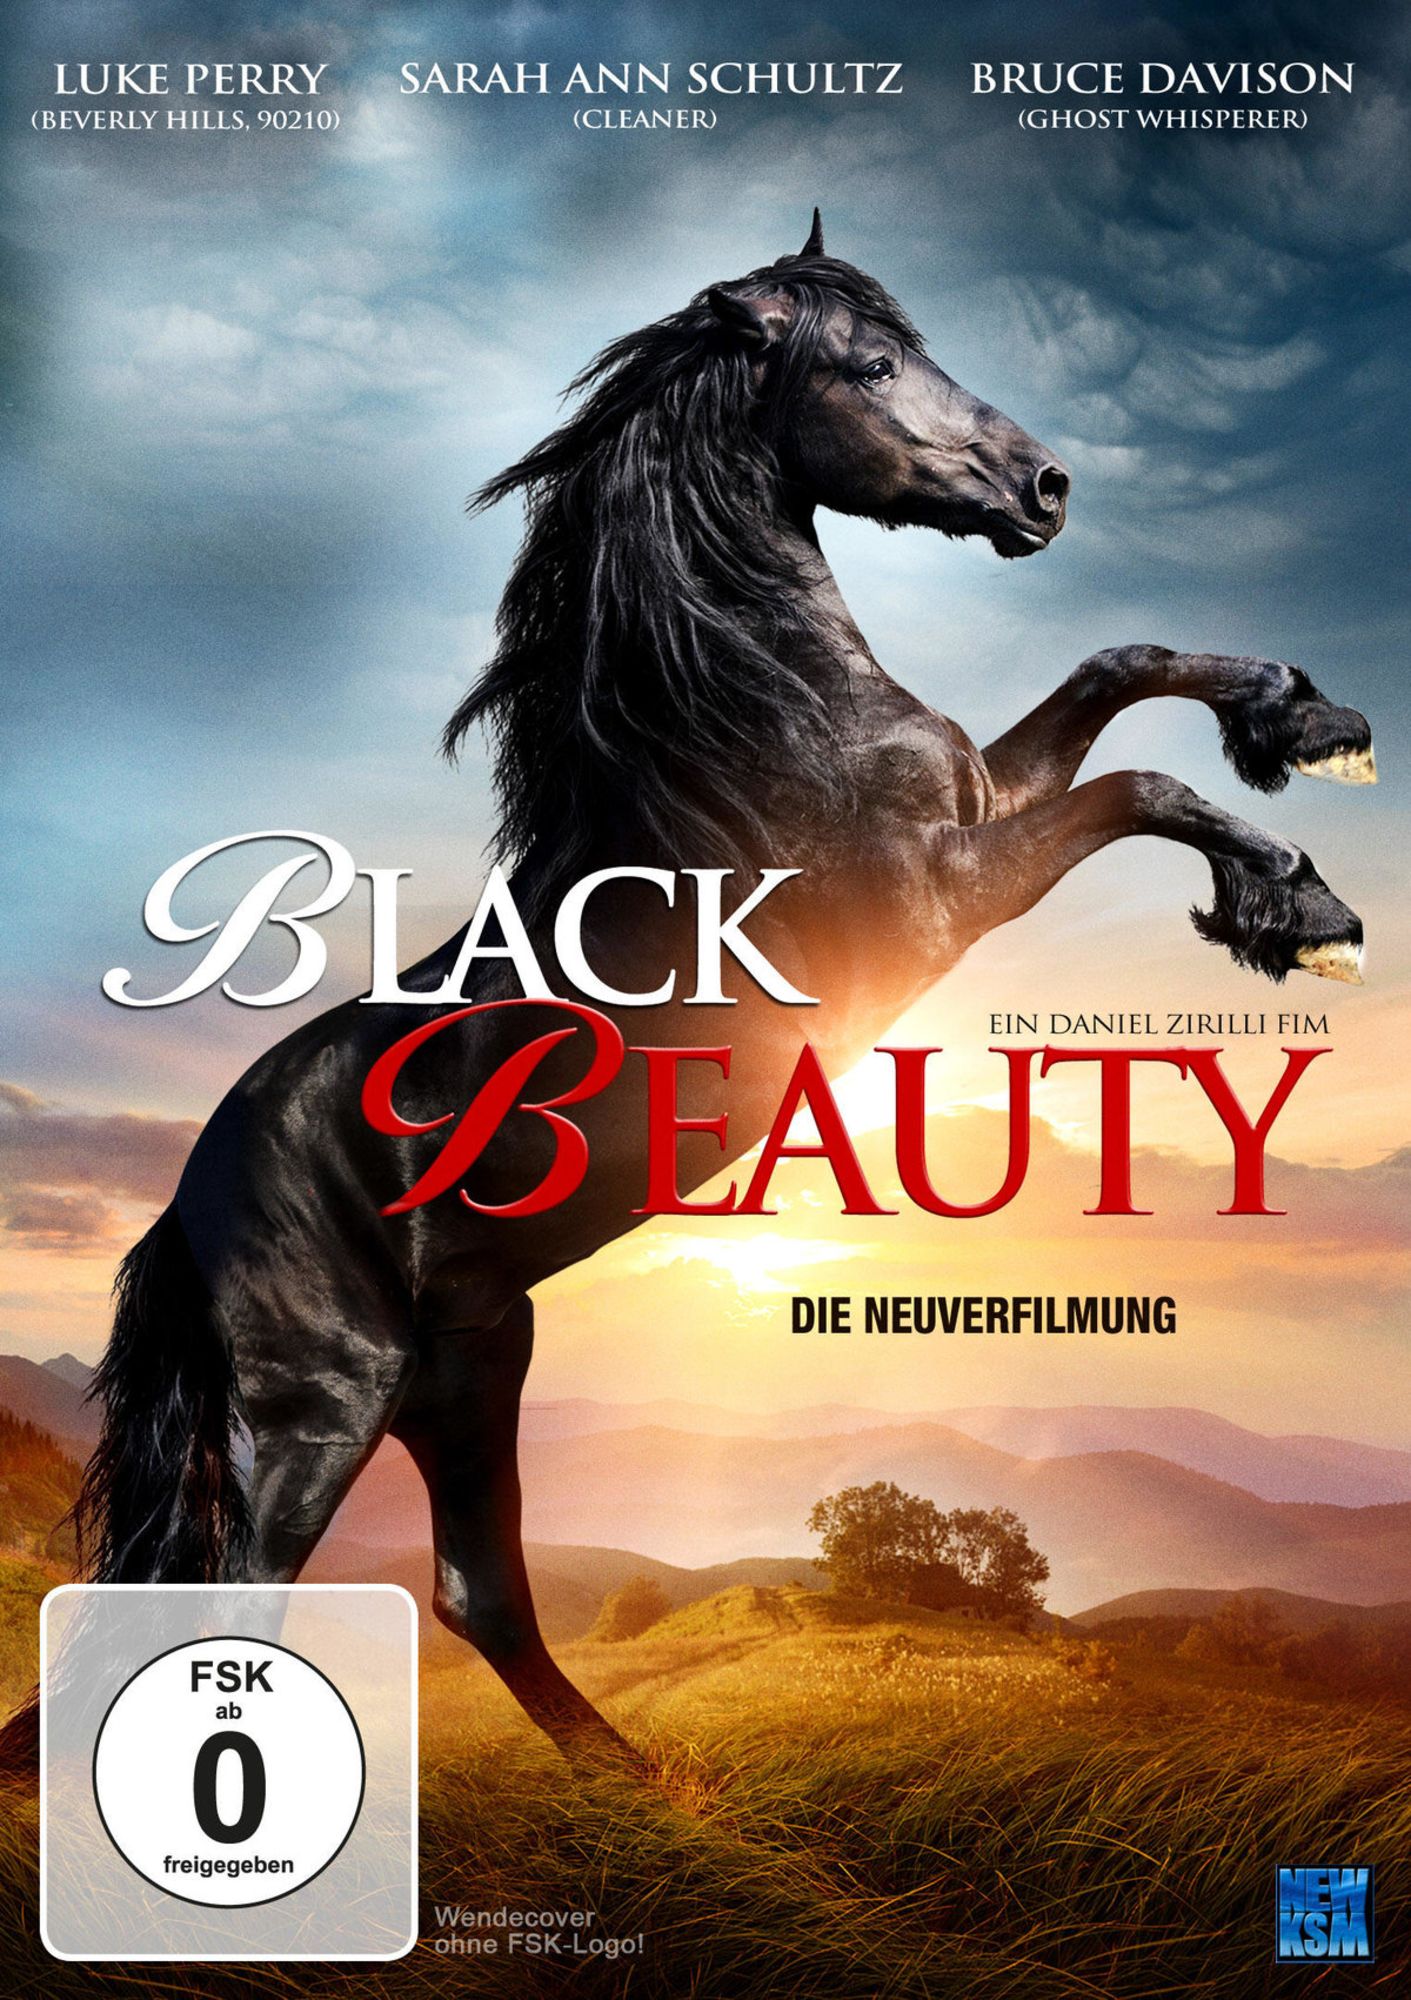 https://images.thalia.media/-/BF2000-2000/259da76f933045139ea8a90e73a80812/black-beauty-die-neuverfilmung-dvd-luke-perry.jpeg